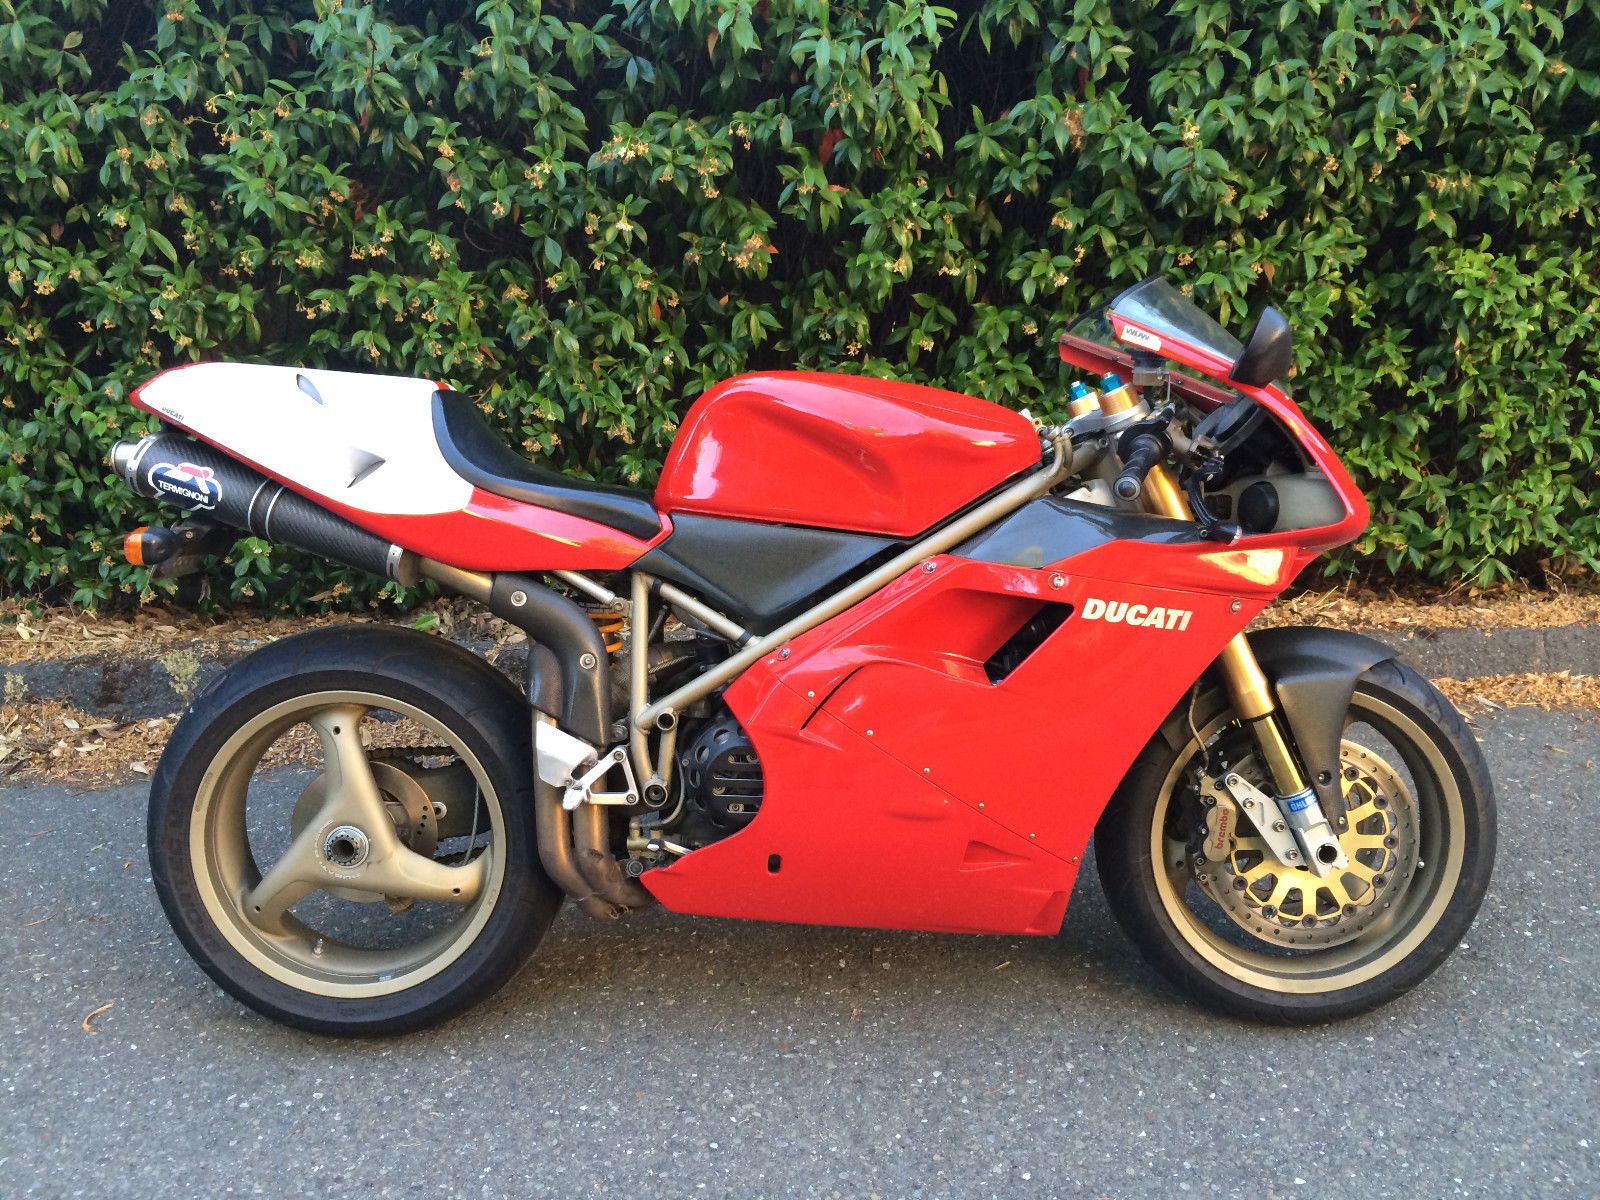 The Ducati 916 SPS